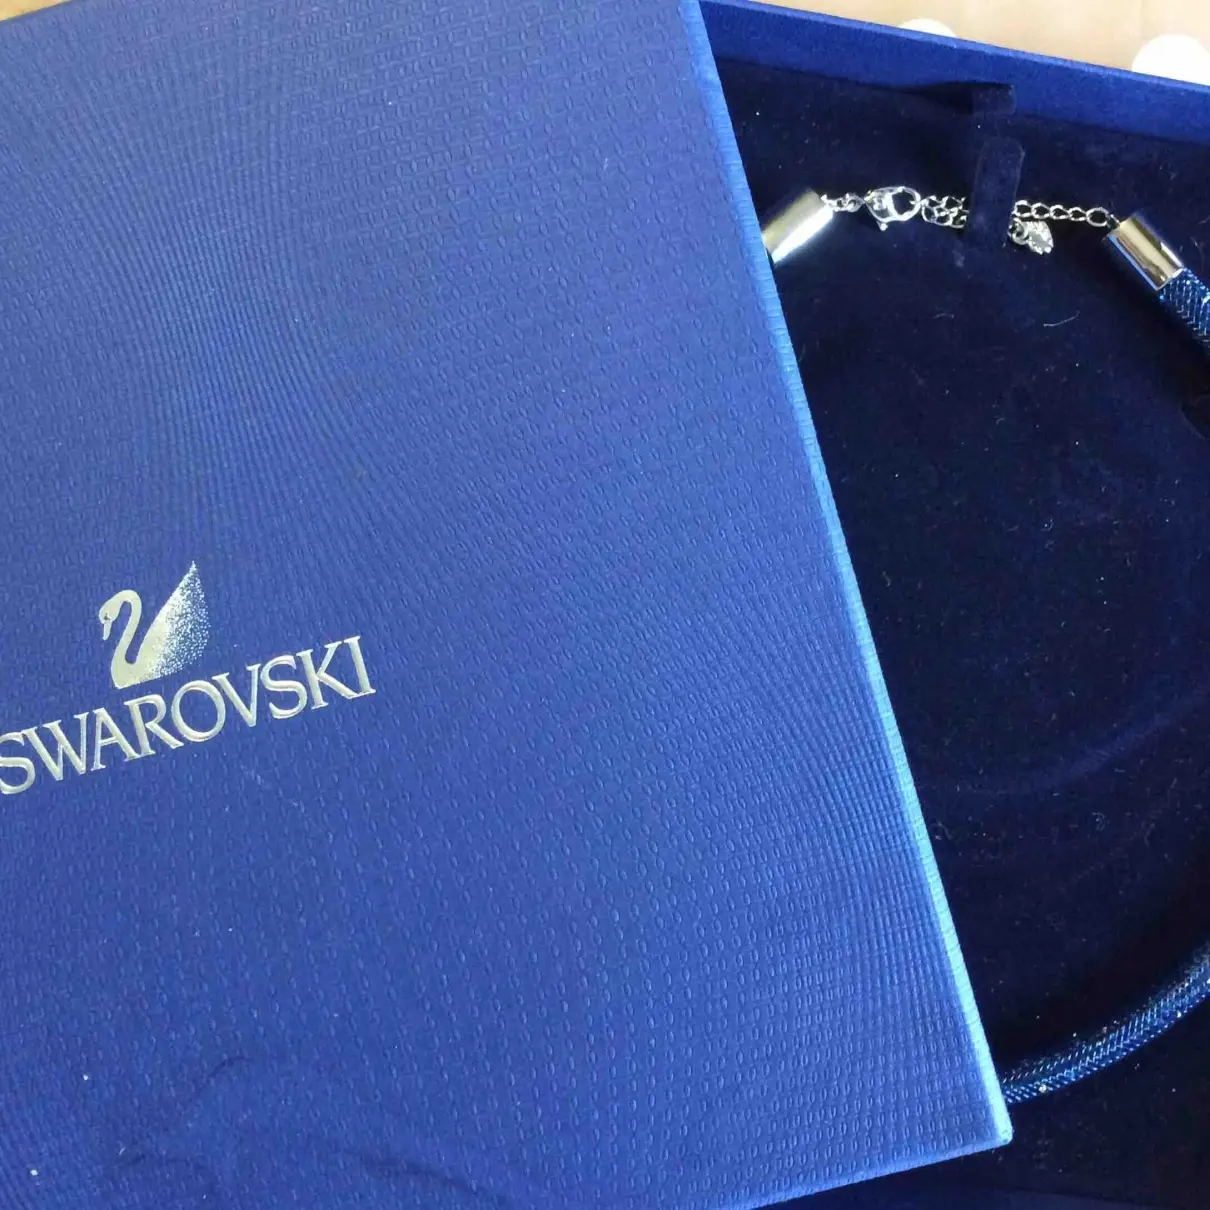 Swarovski Stardust crystal necklace for sale